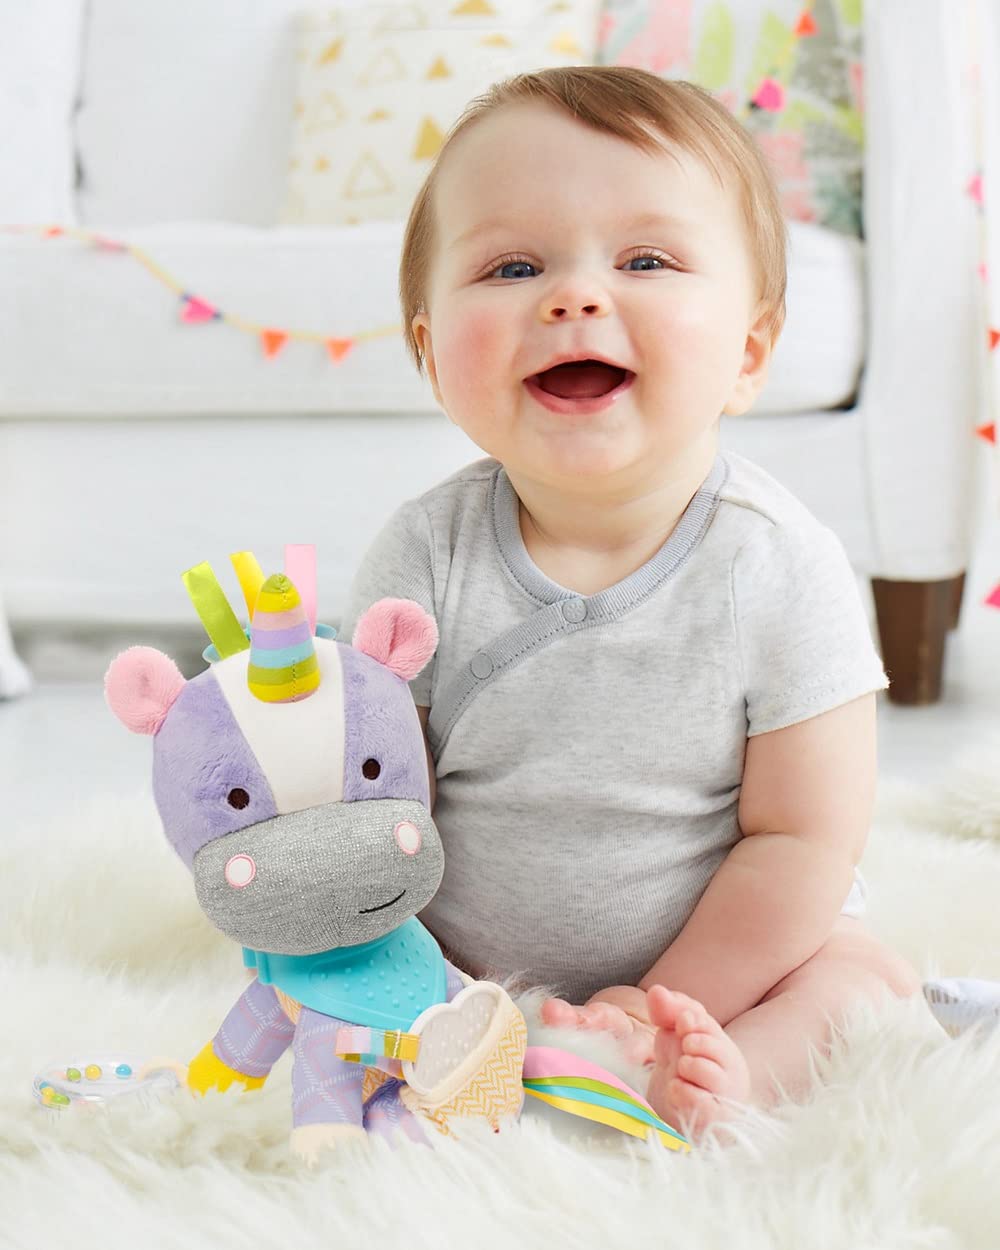 Skip Hop Bandana Buddies Baby Activity and Teething Toy with Multi-Sensory Rattle and Textures, Unicorn